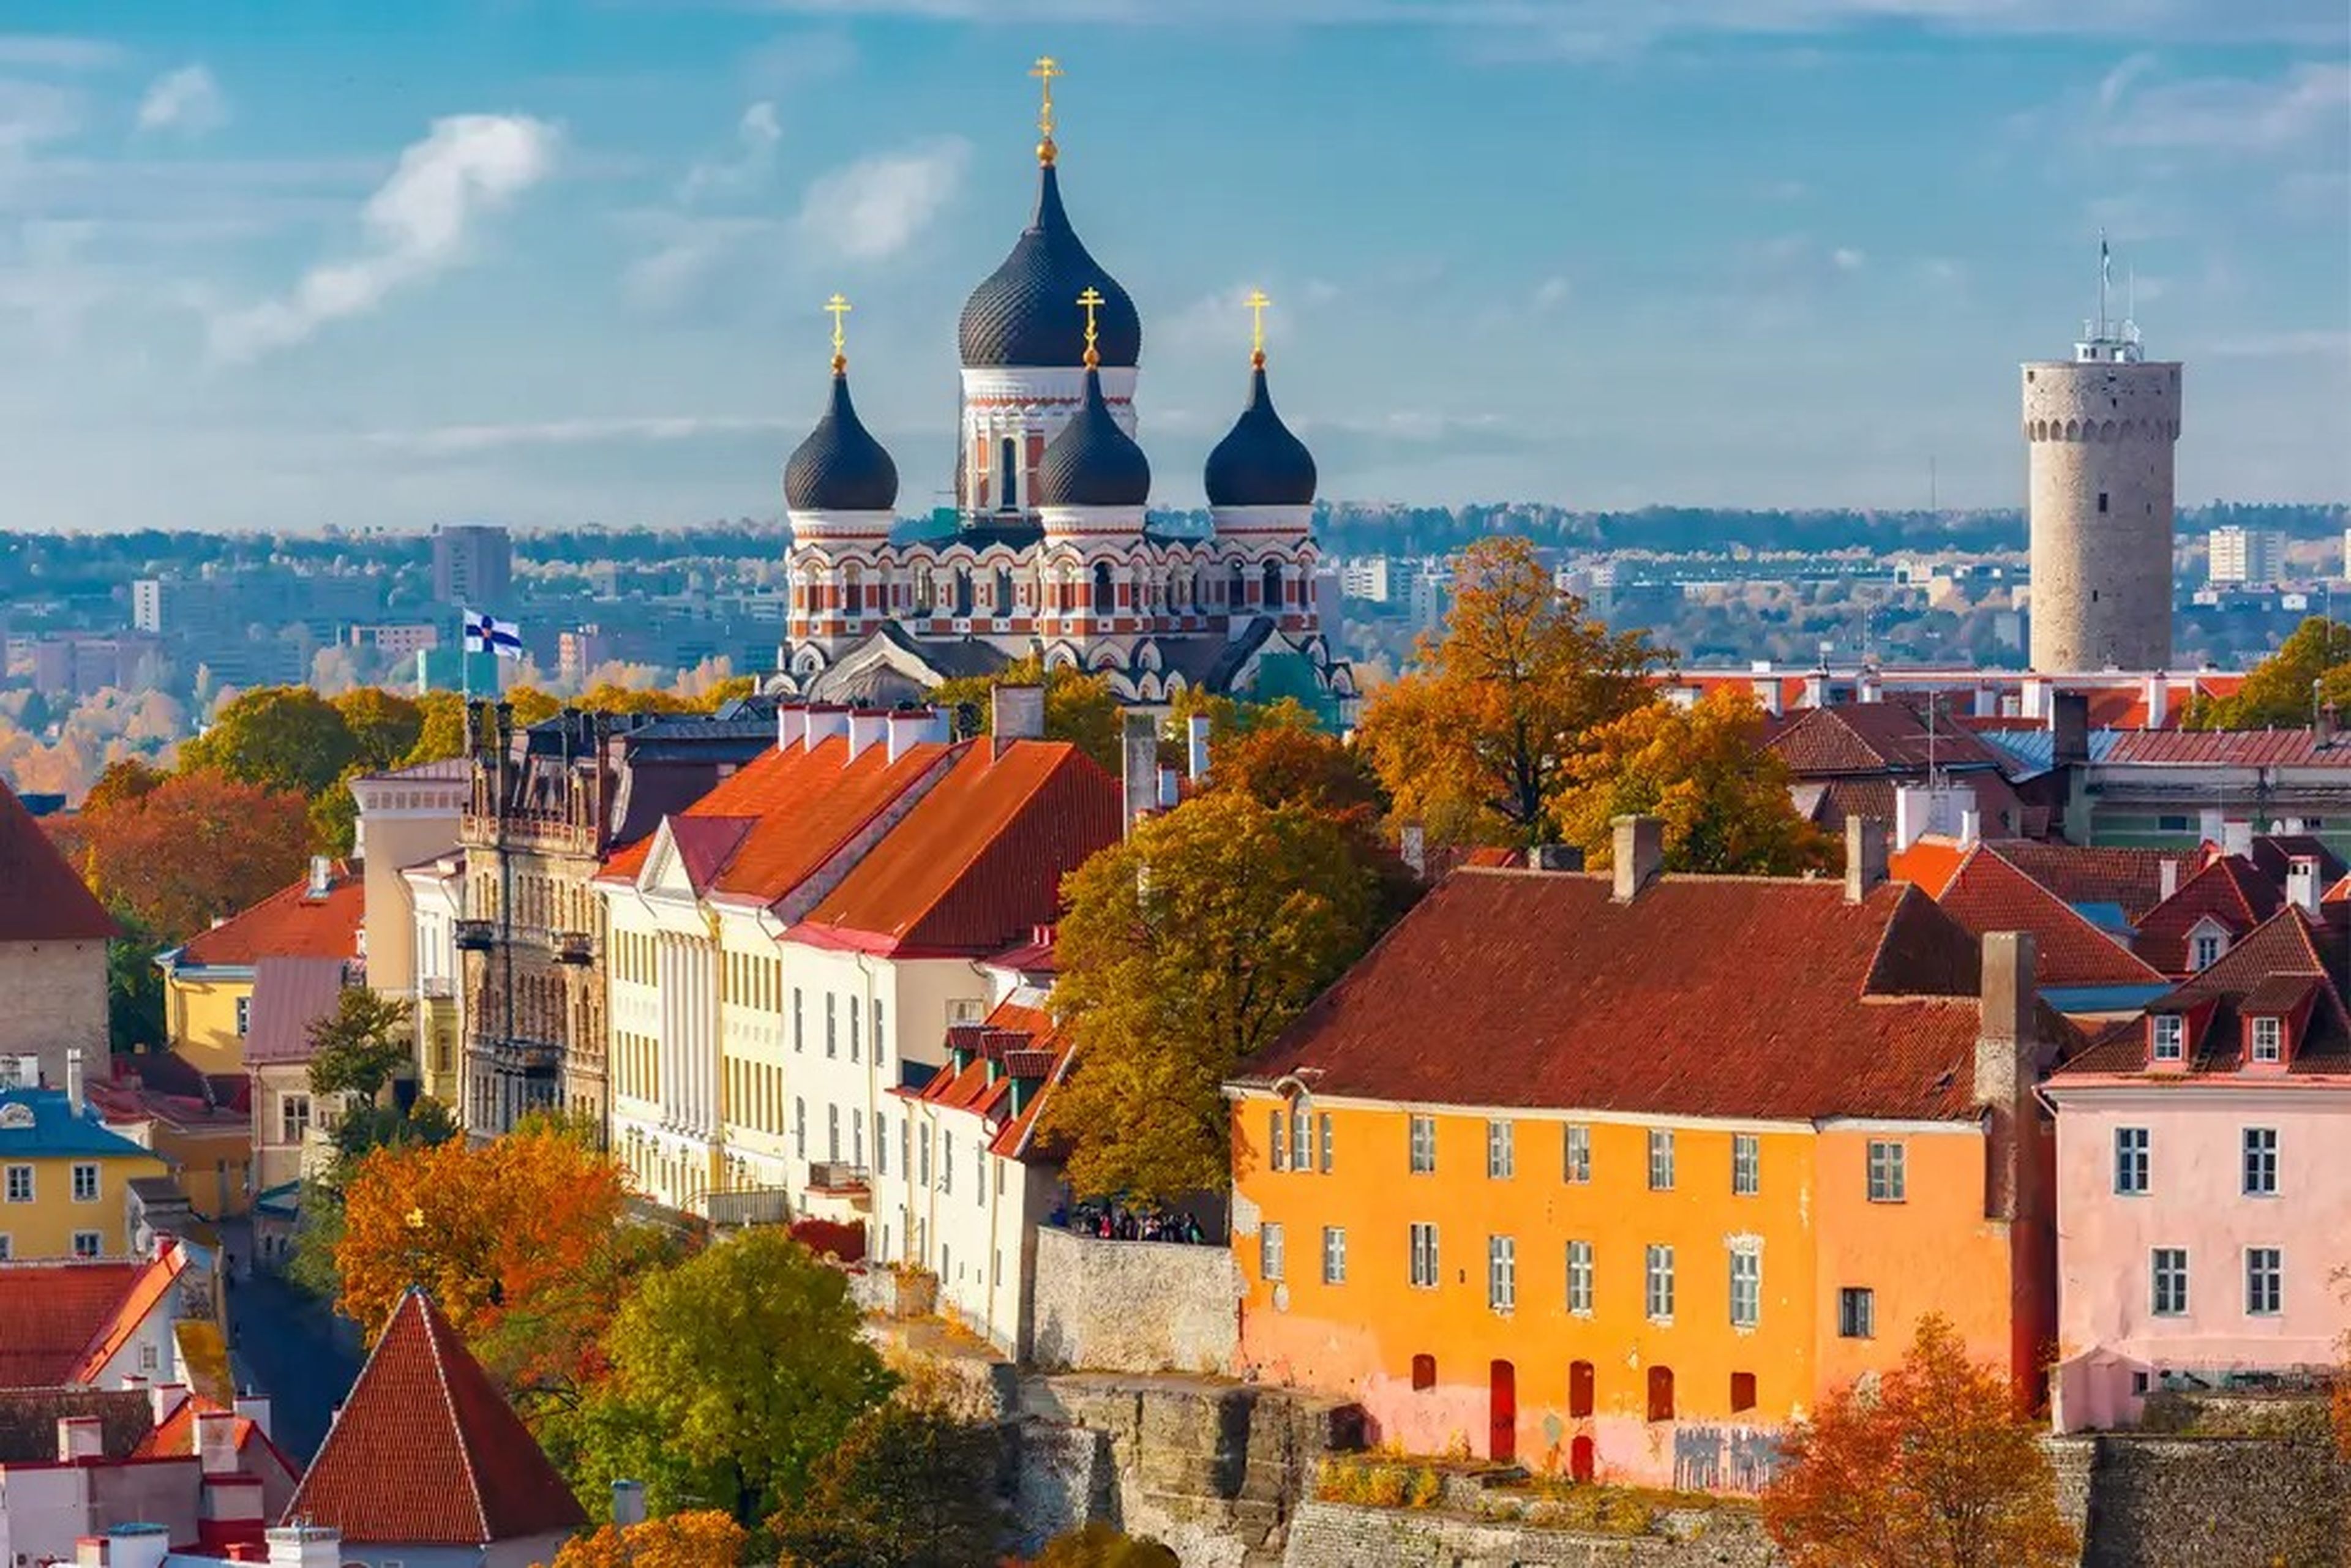 View from the tower of St. Olaf church, Tallinn, Estonia.